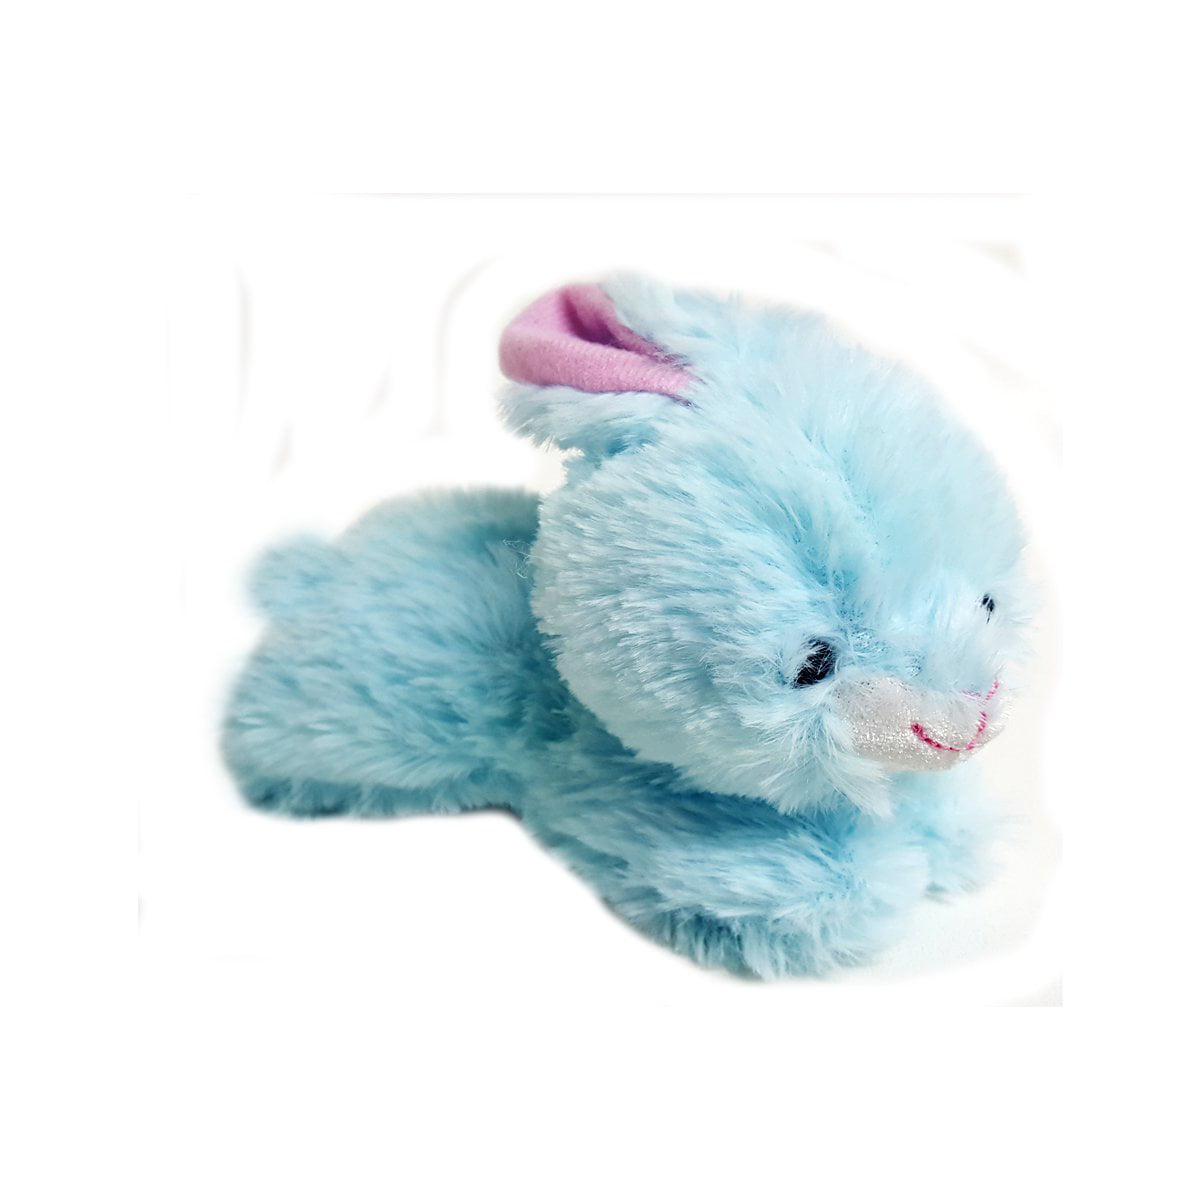 tiny stuffed bunnies